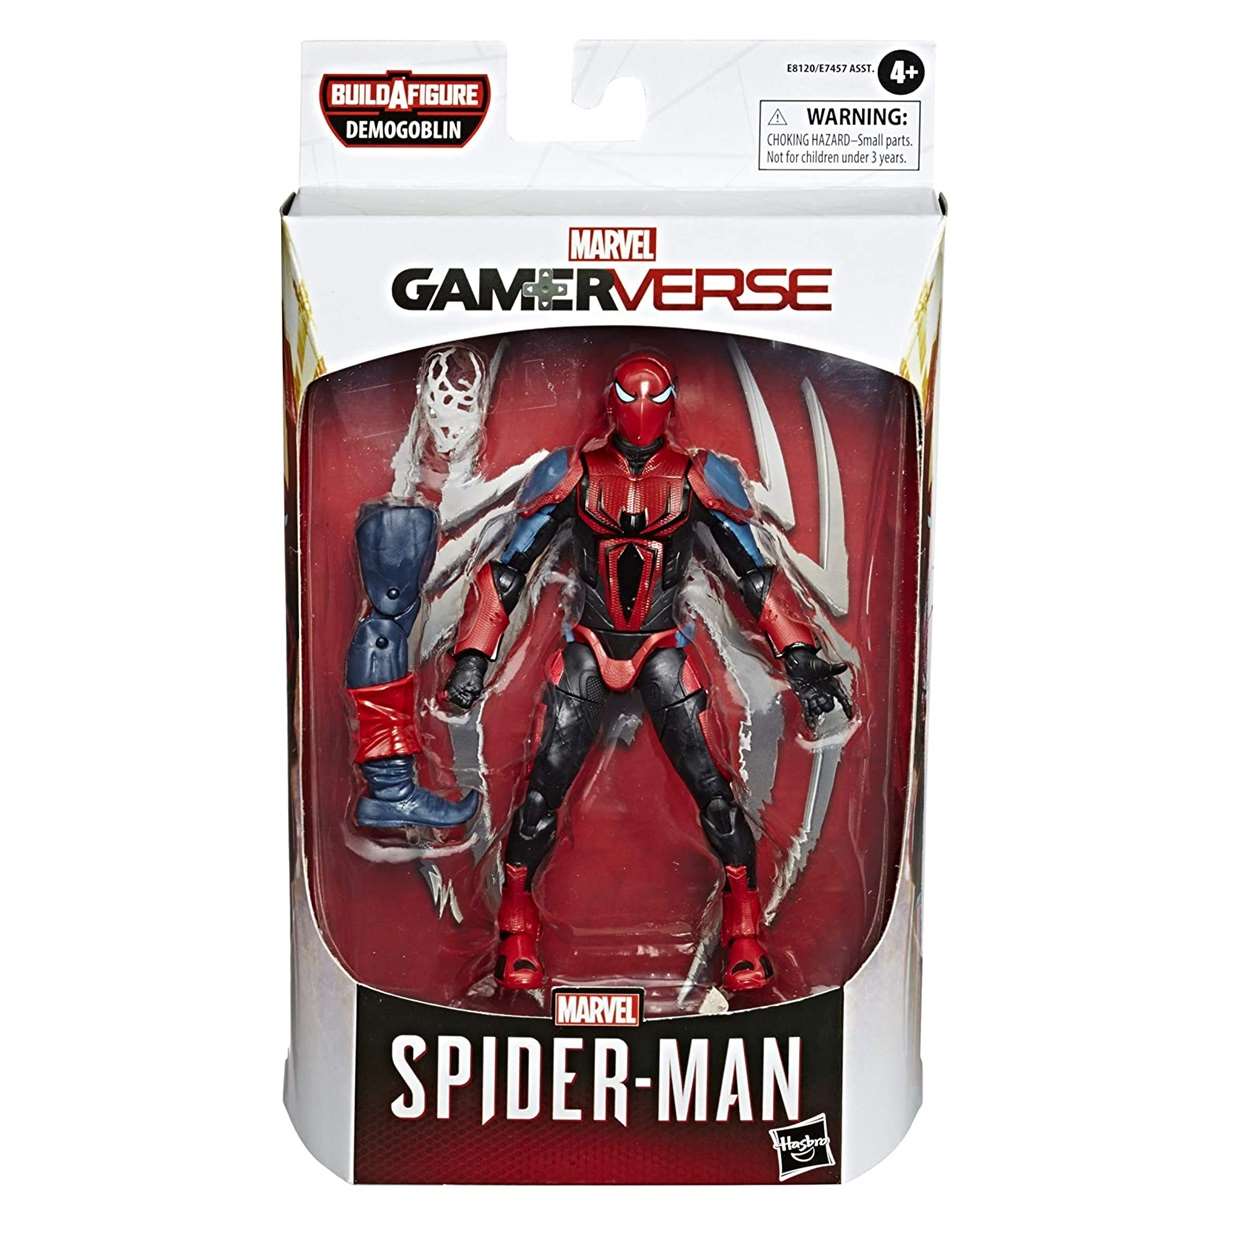 Spider Armor Mk lll Figura B A F Gamerverse Demogoblin Legends